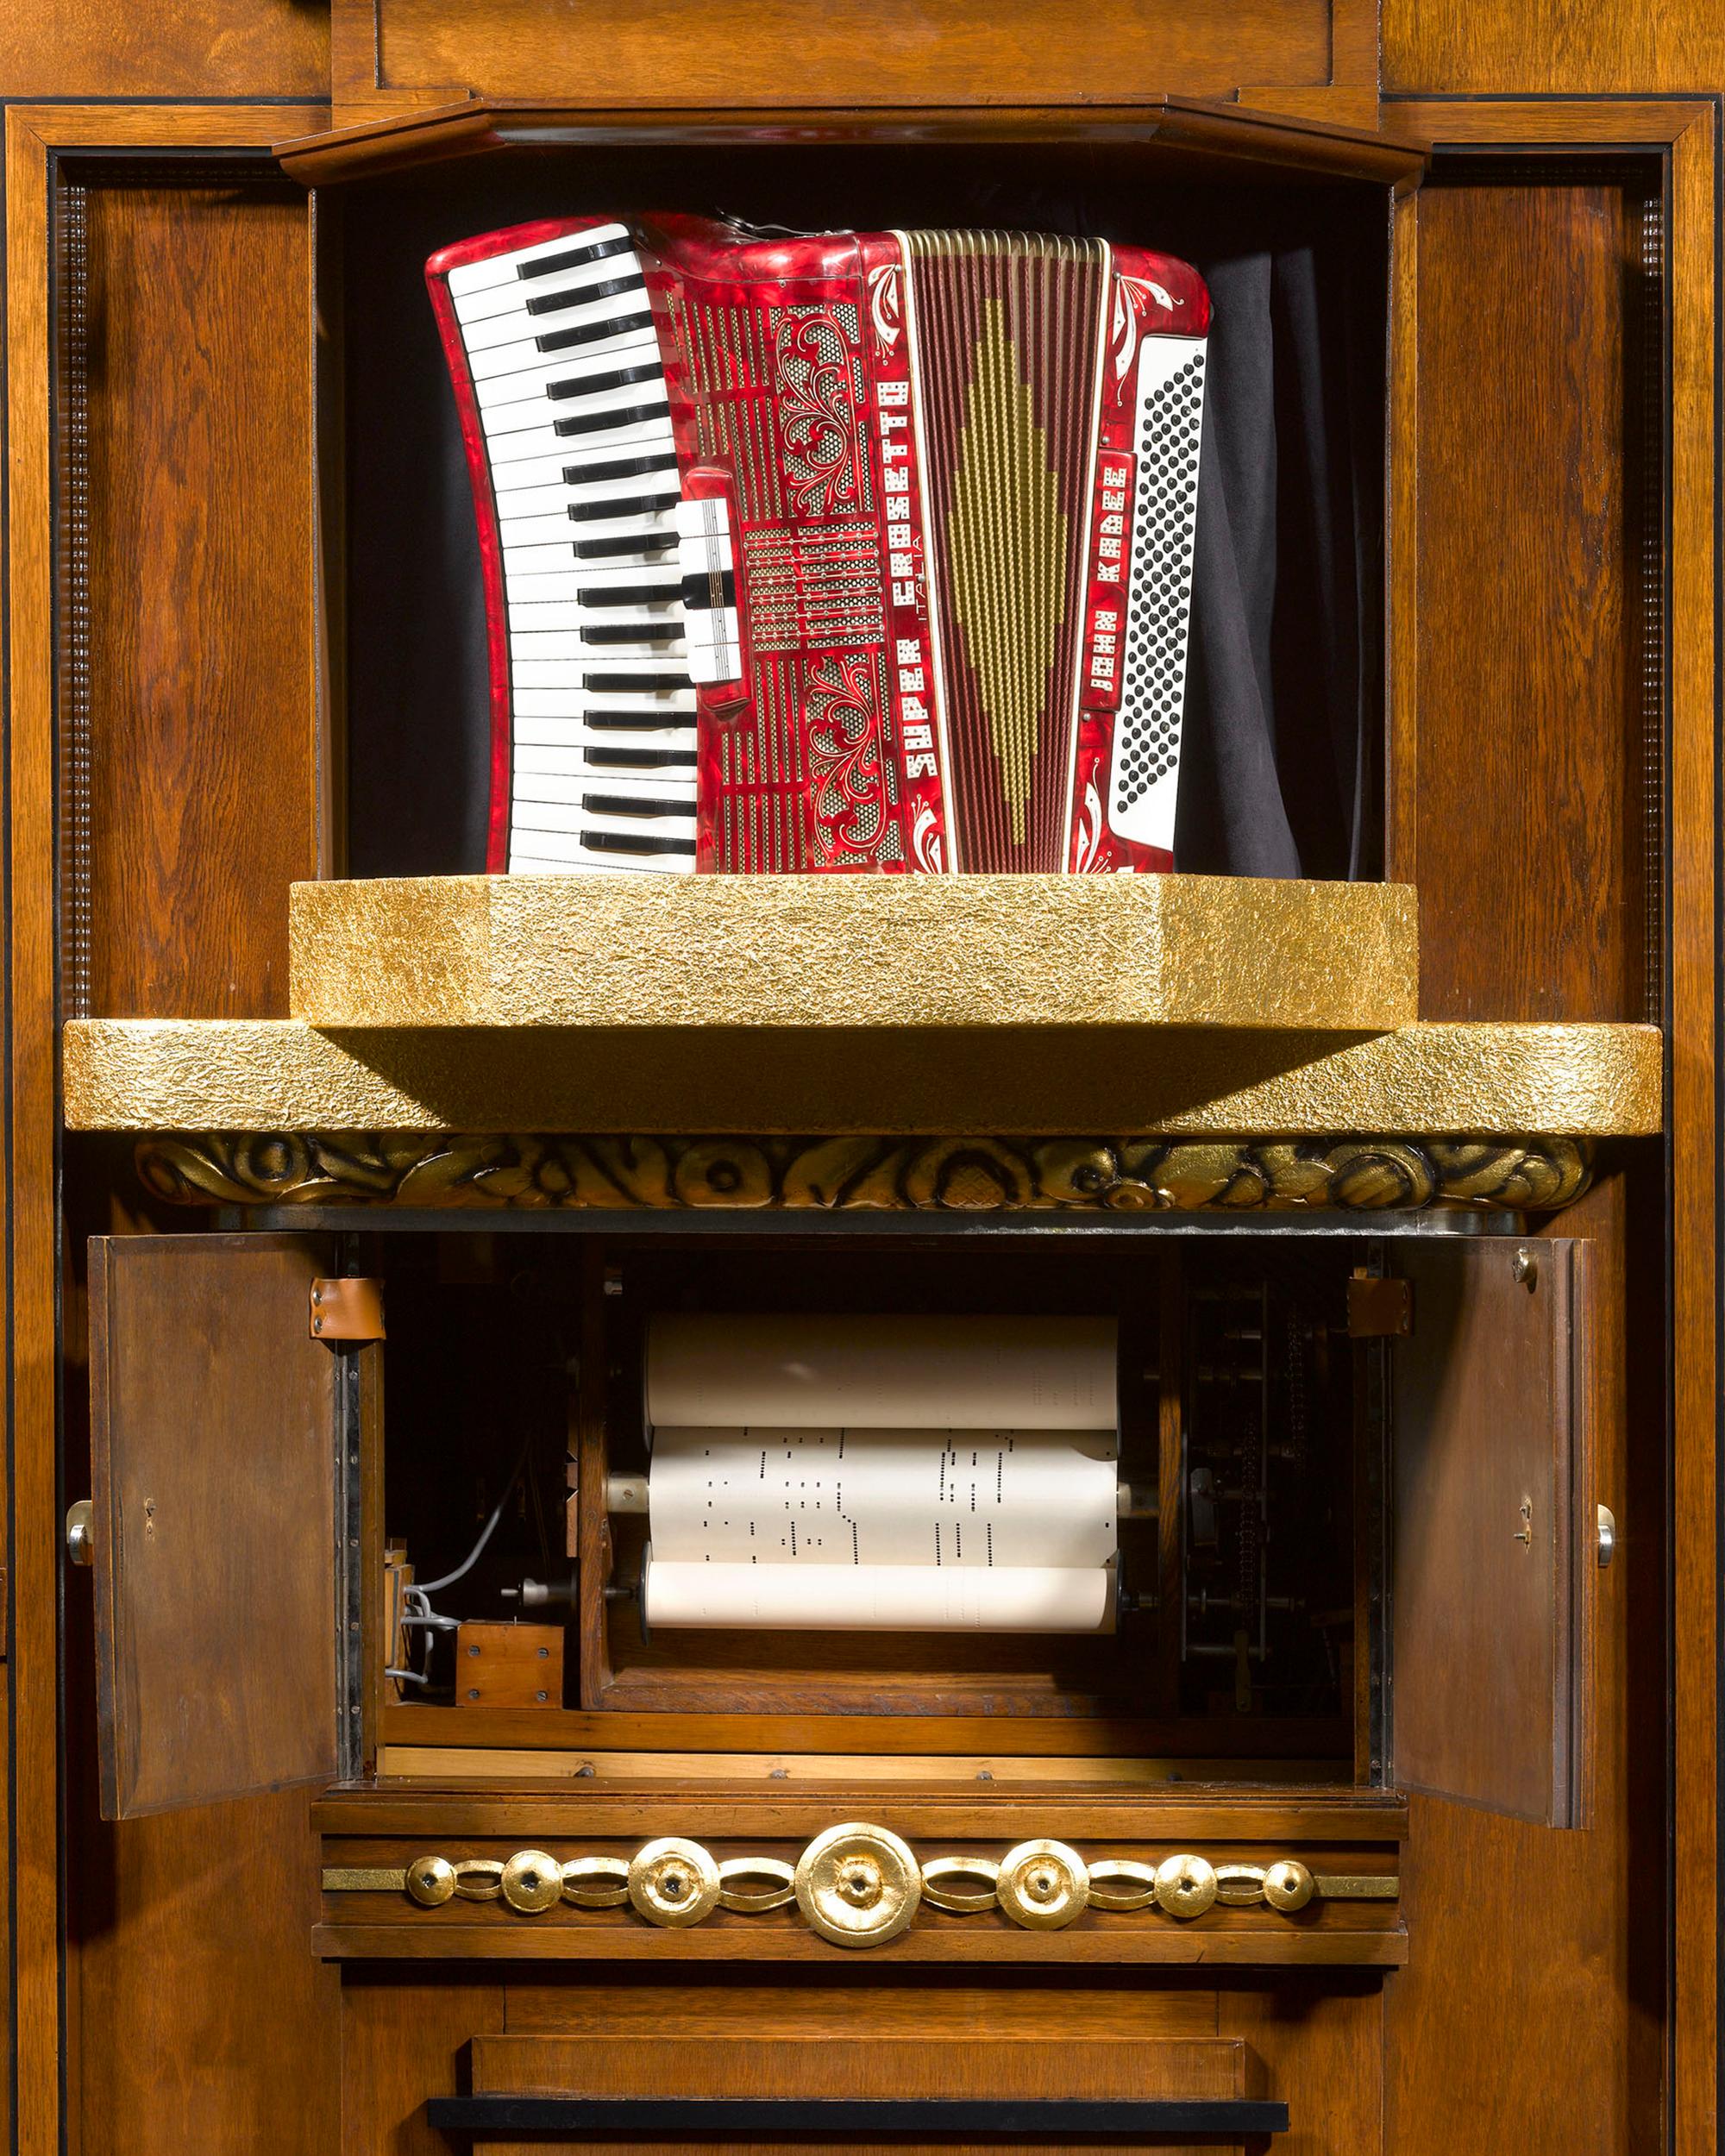 Belgian Arburo Orchestrion Organ By Bursens And Roels For Sale